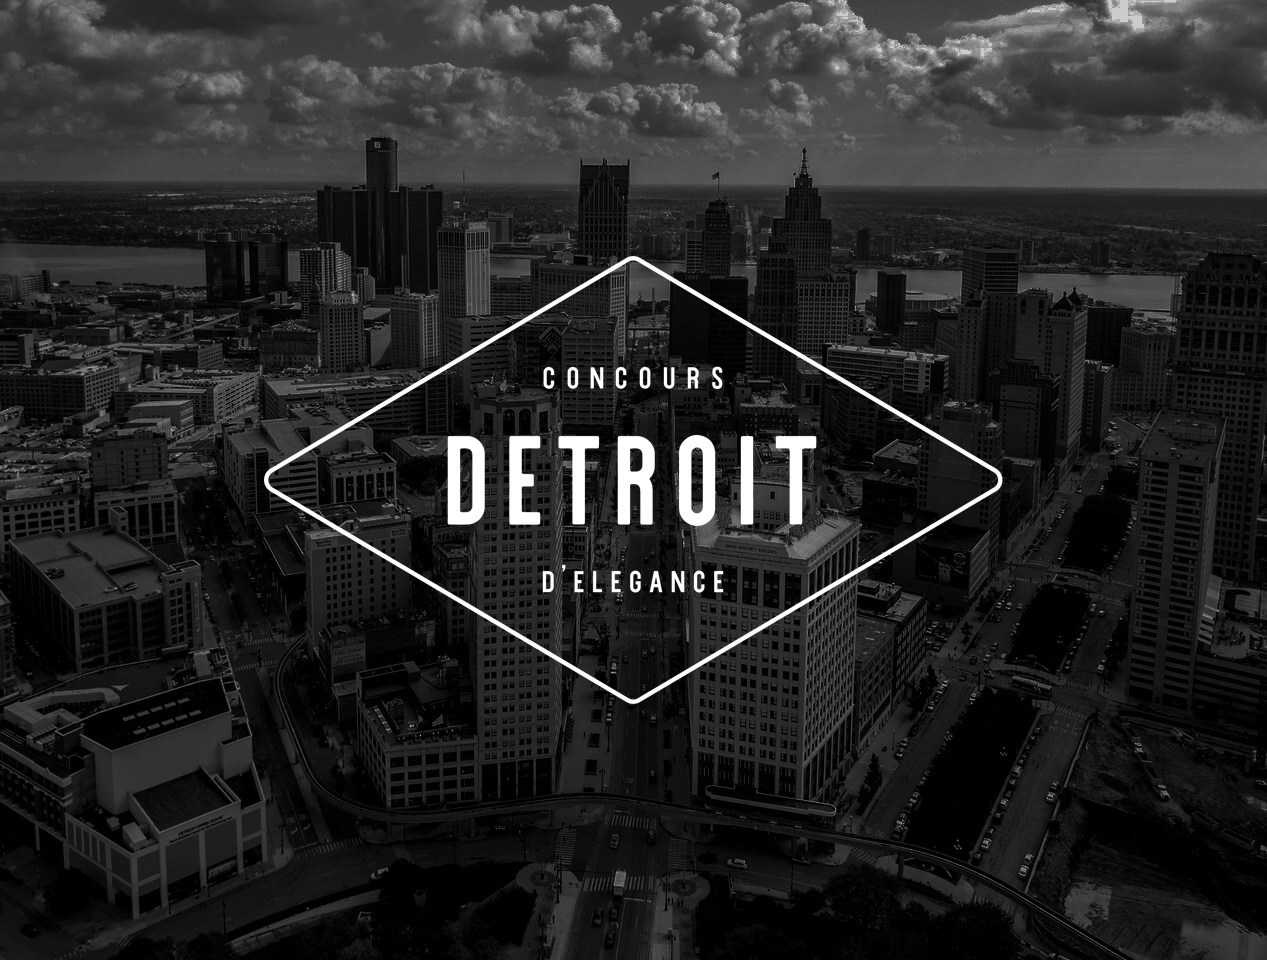 Concours of America Reimagined as Detroit Concours d'Elegance | THE SHOP